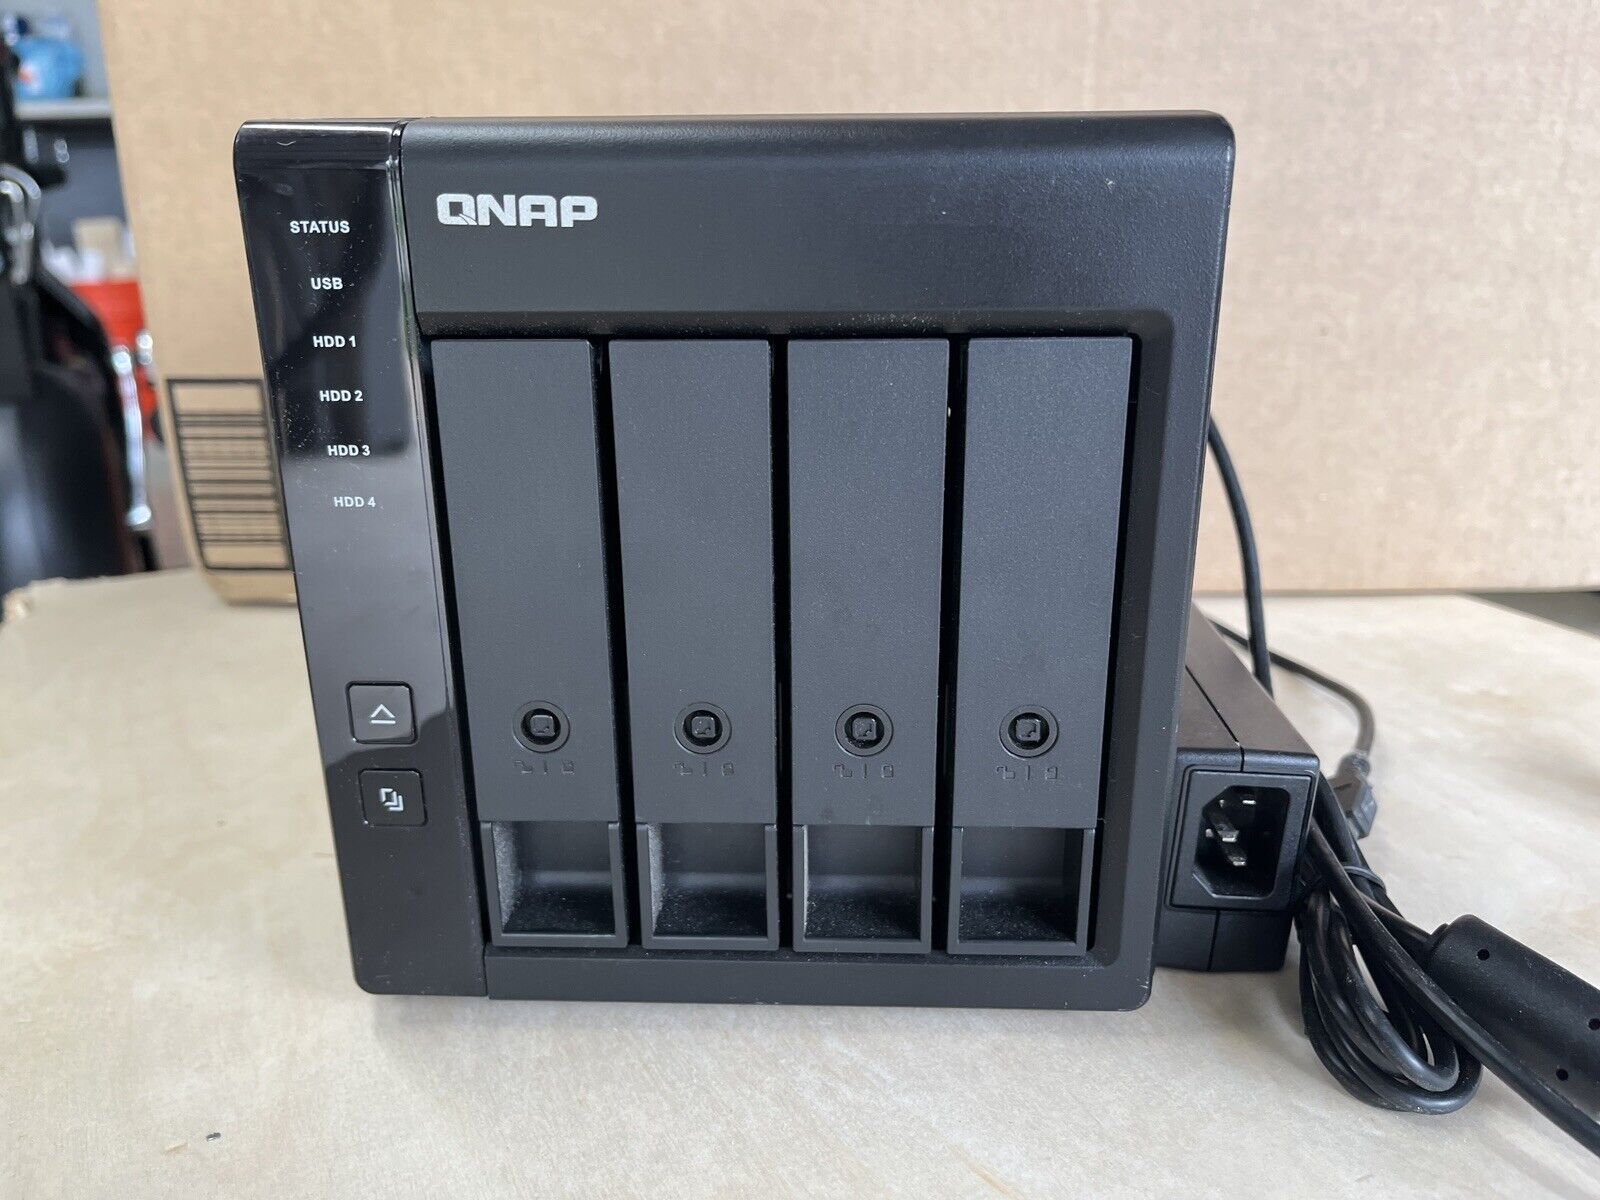 QNAP TR-004 4 Bay USBC Storage with Hardware RAID With 4 Samsung 250GB SSDs